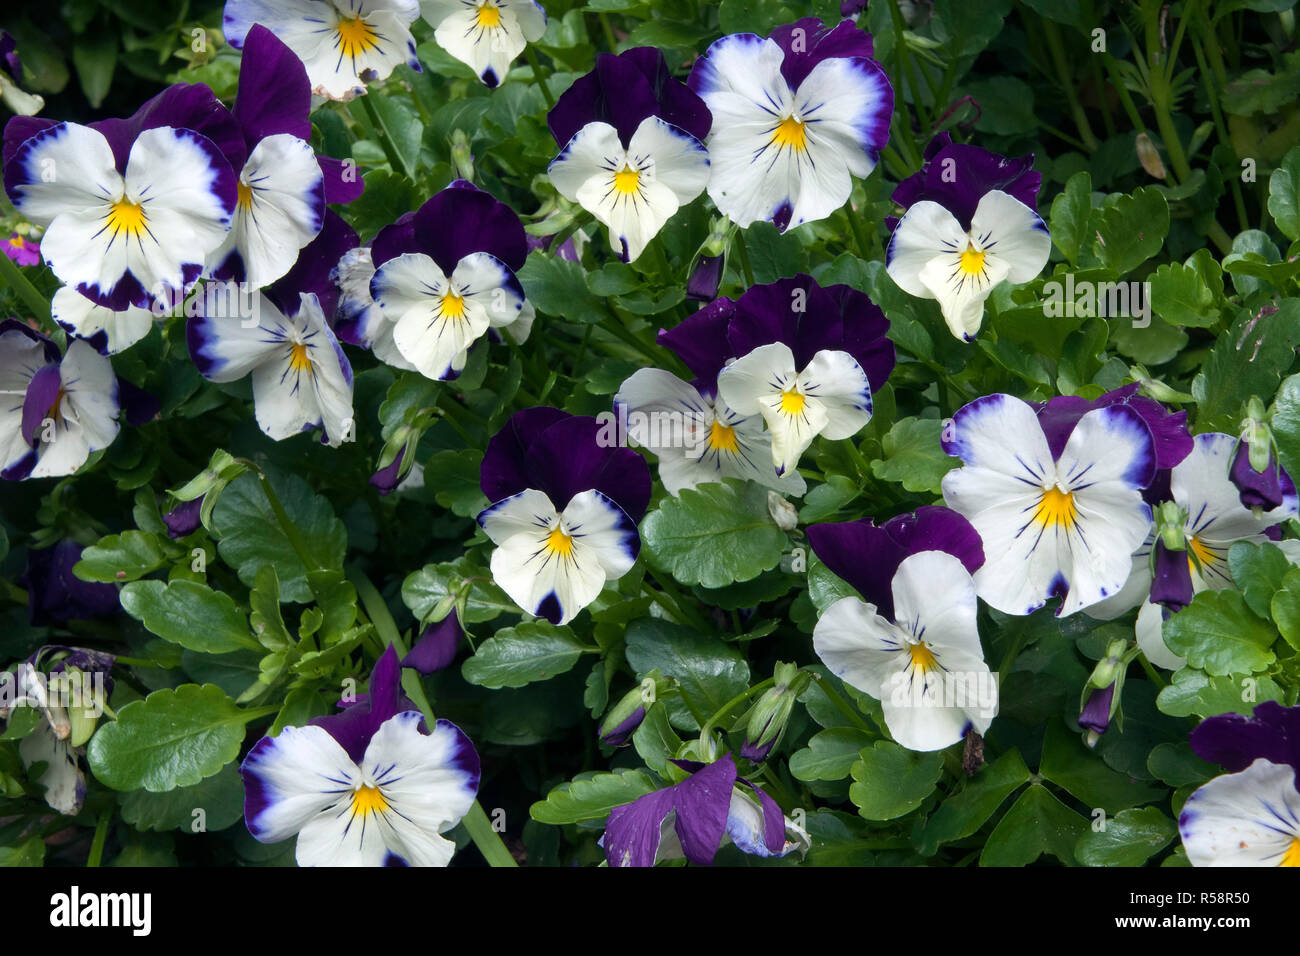 Sydney Australia, garden border of dark purple and white pansy plants Stock Photo